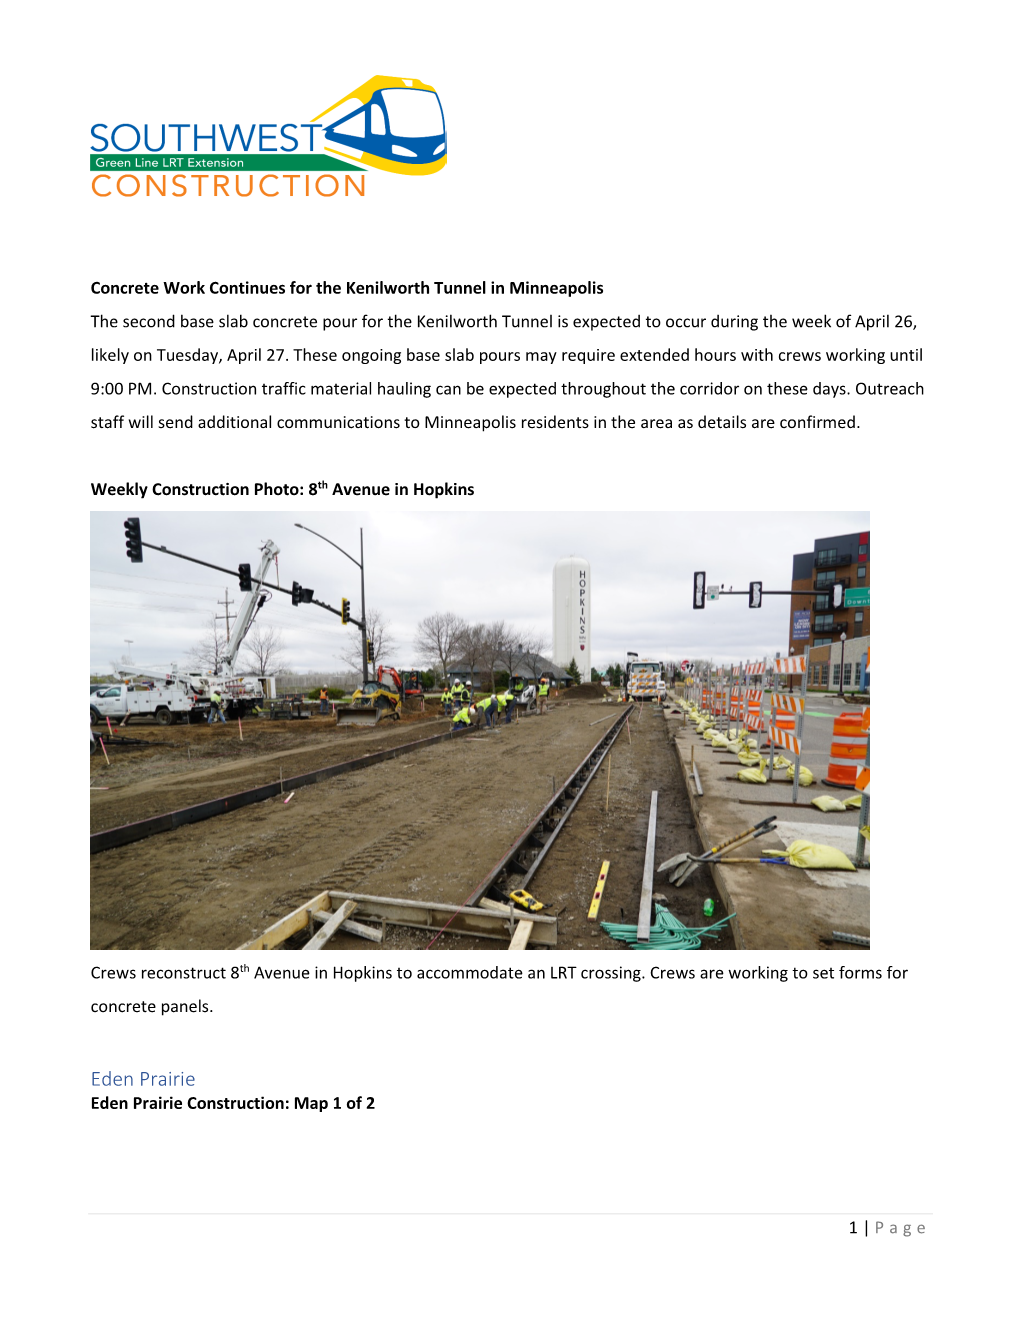 SWLRT Civil Construction Update